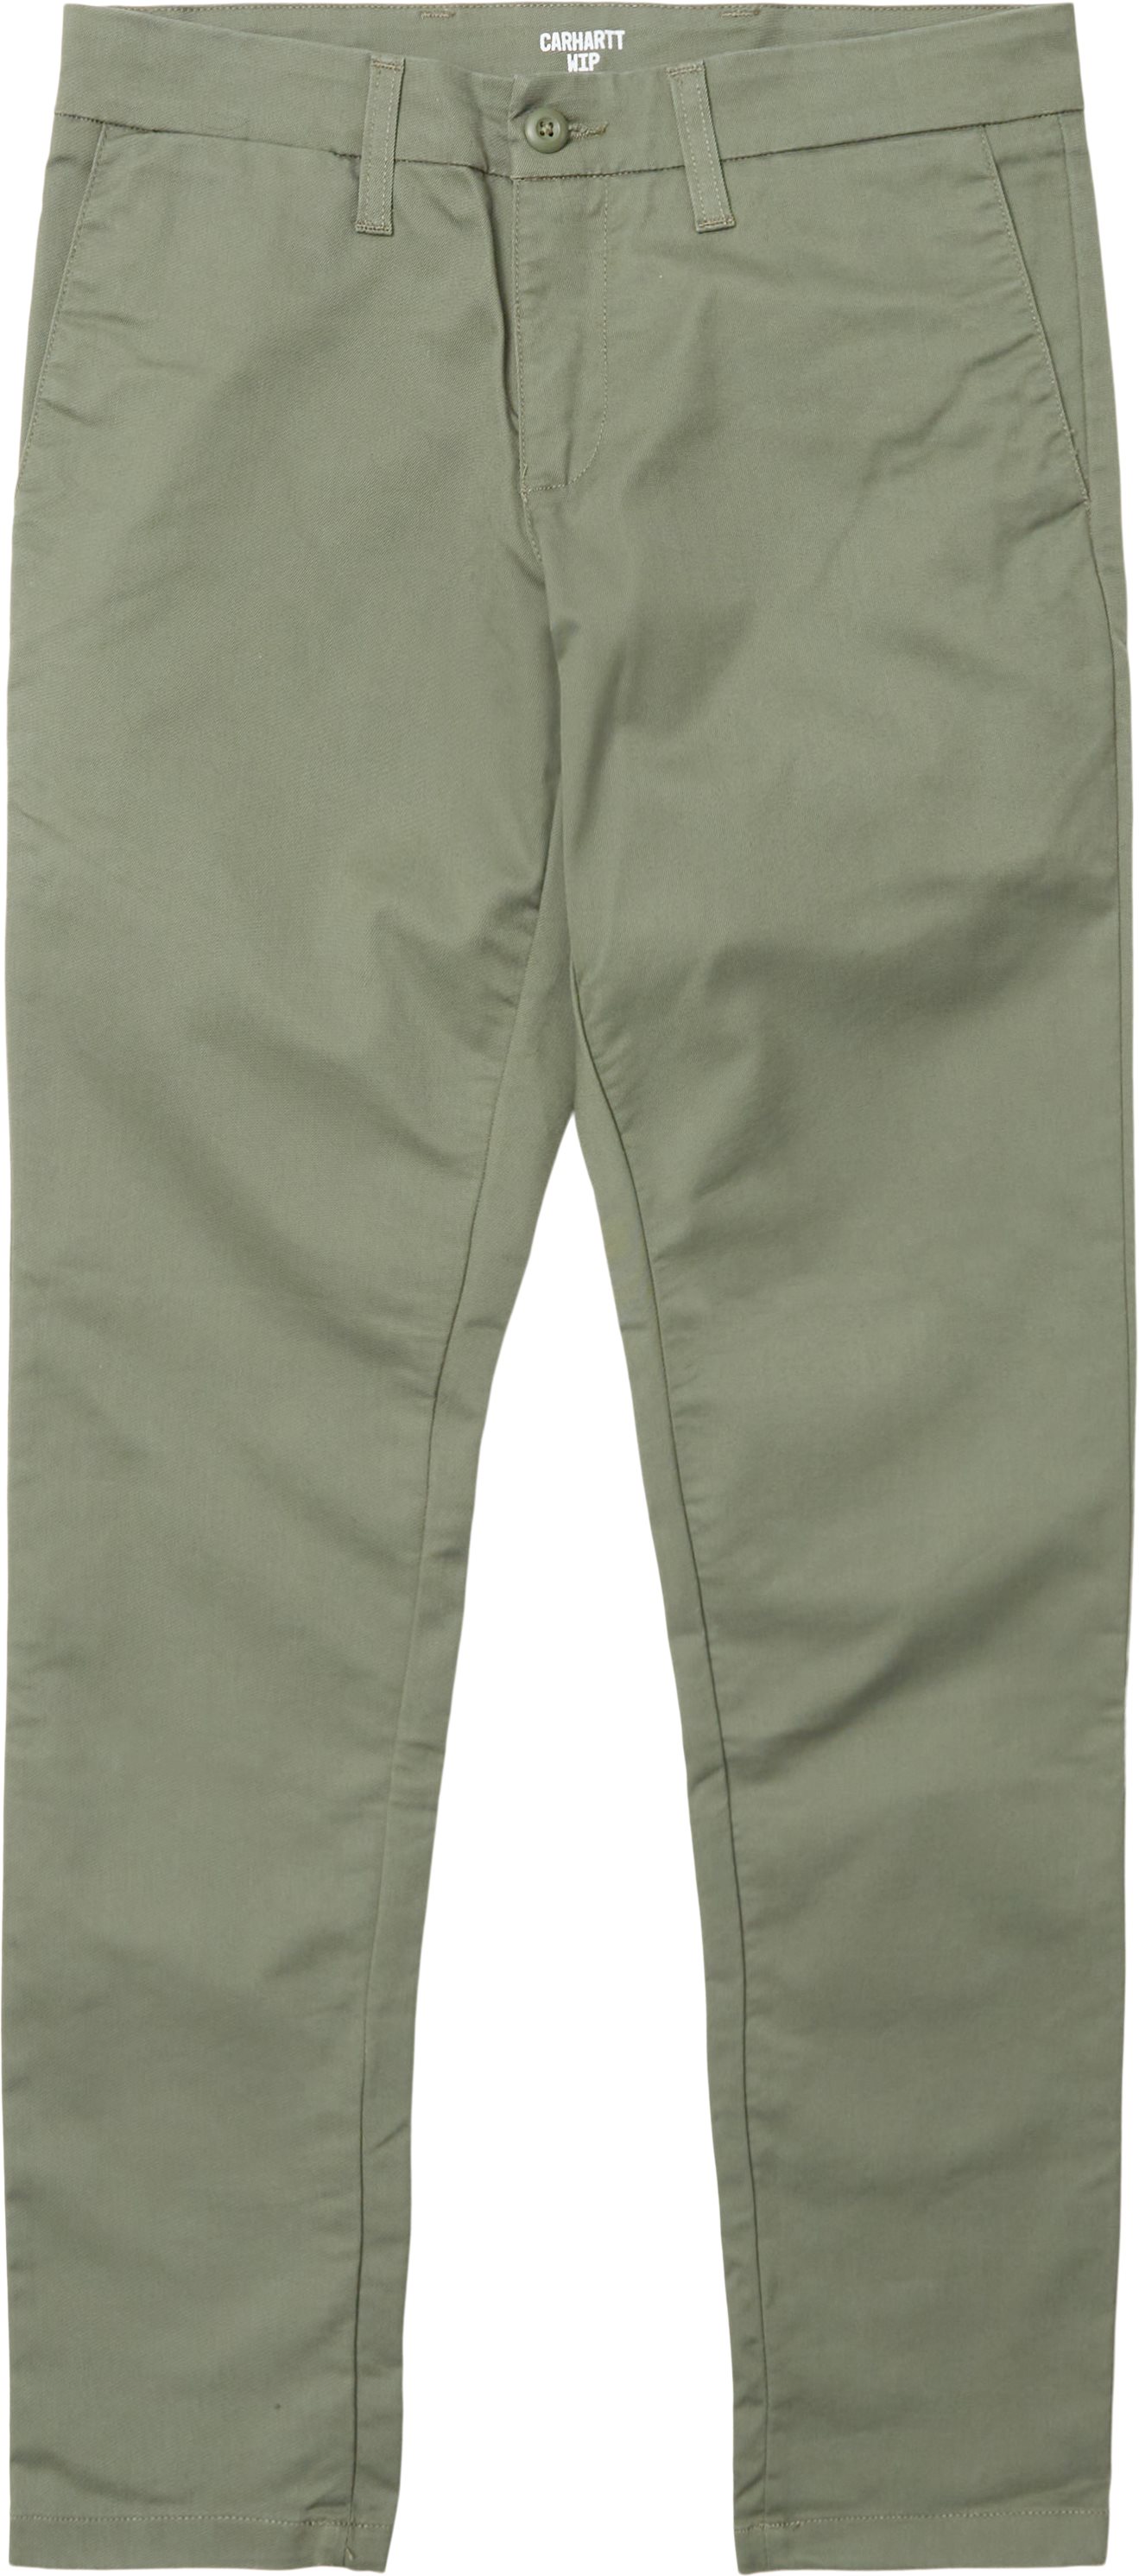 Sid Pant I003367 - Trousers - Slim fit - Green